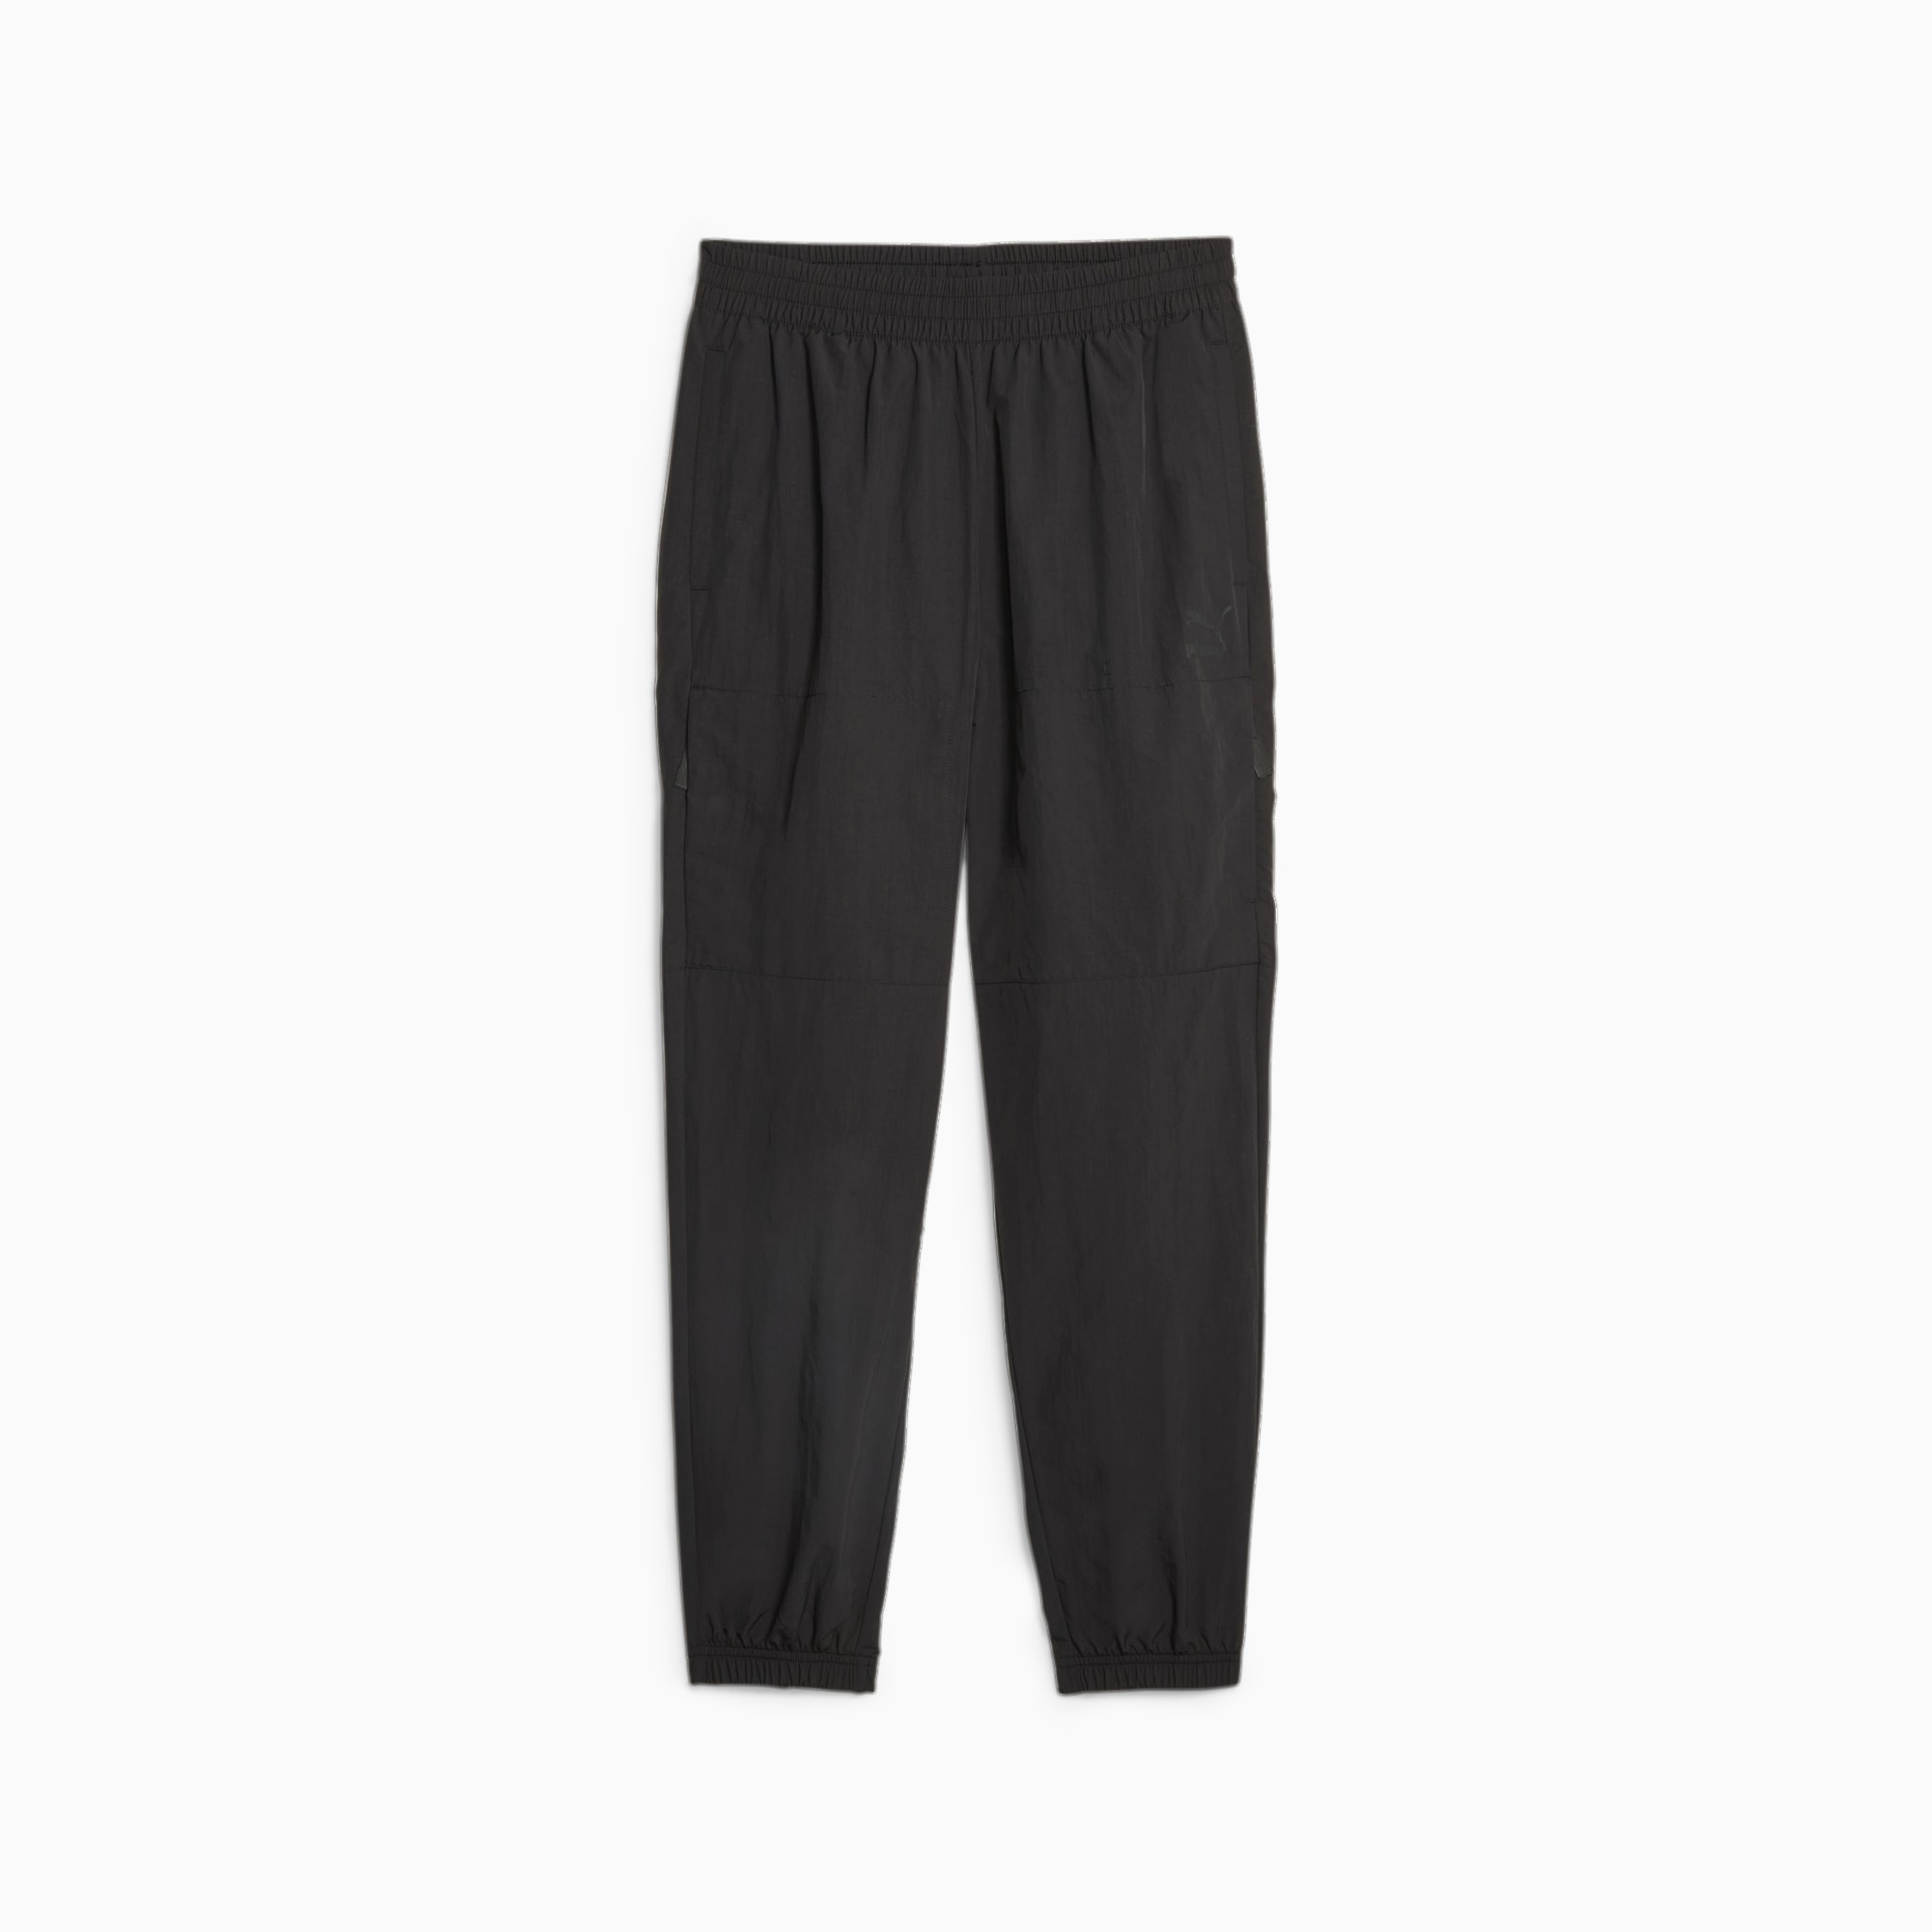 PUMA Classics Utility Men's Cargo Pants, Black, Size L, Clothing